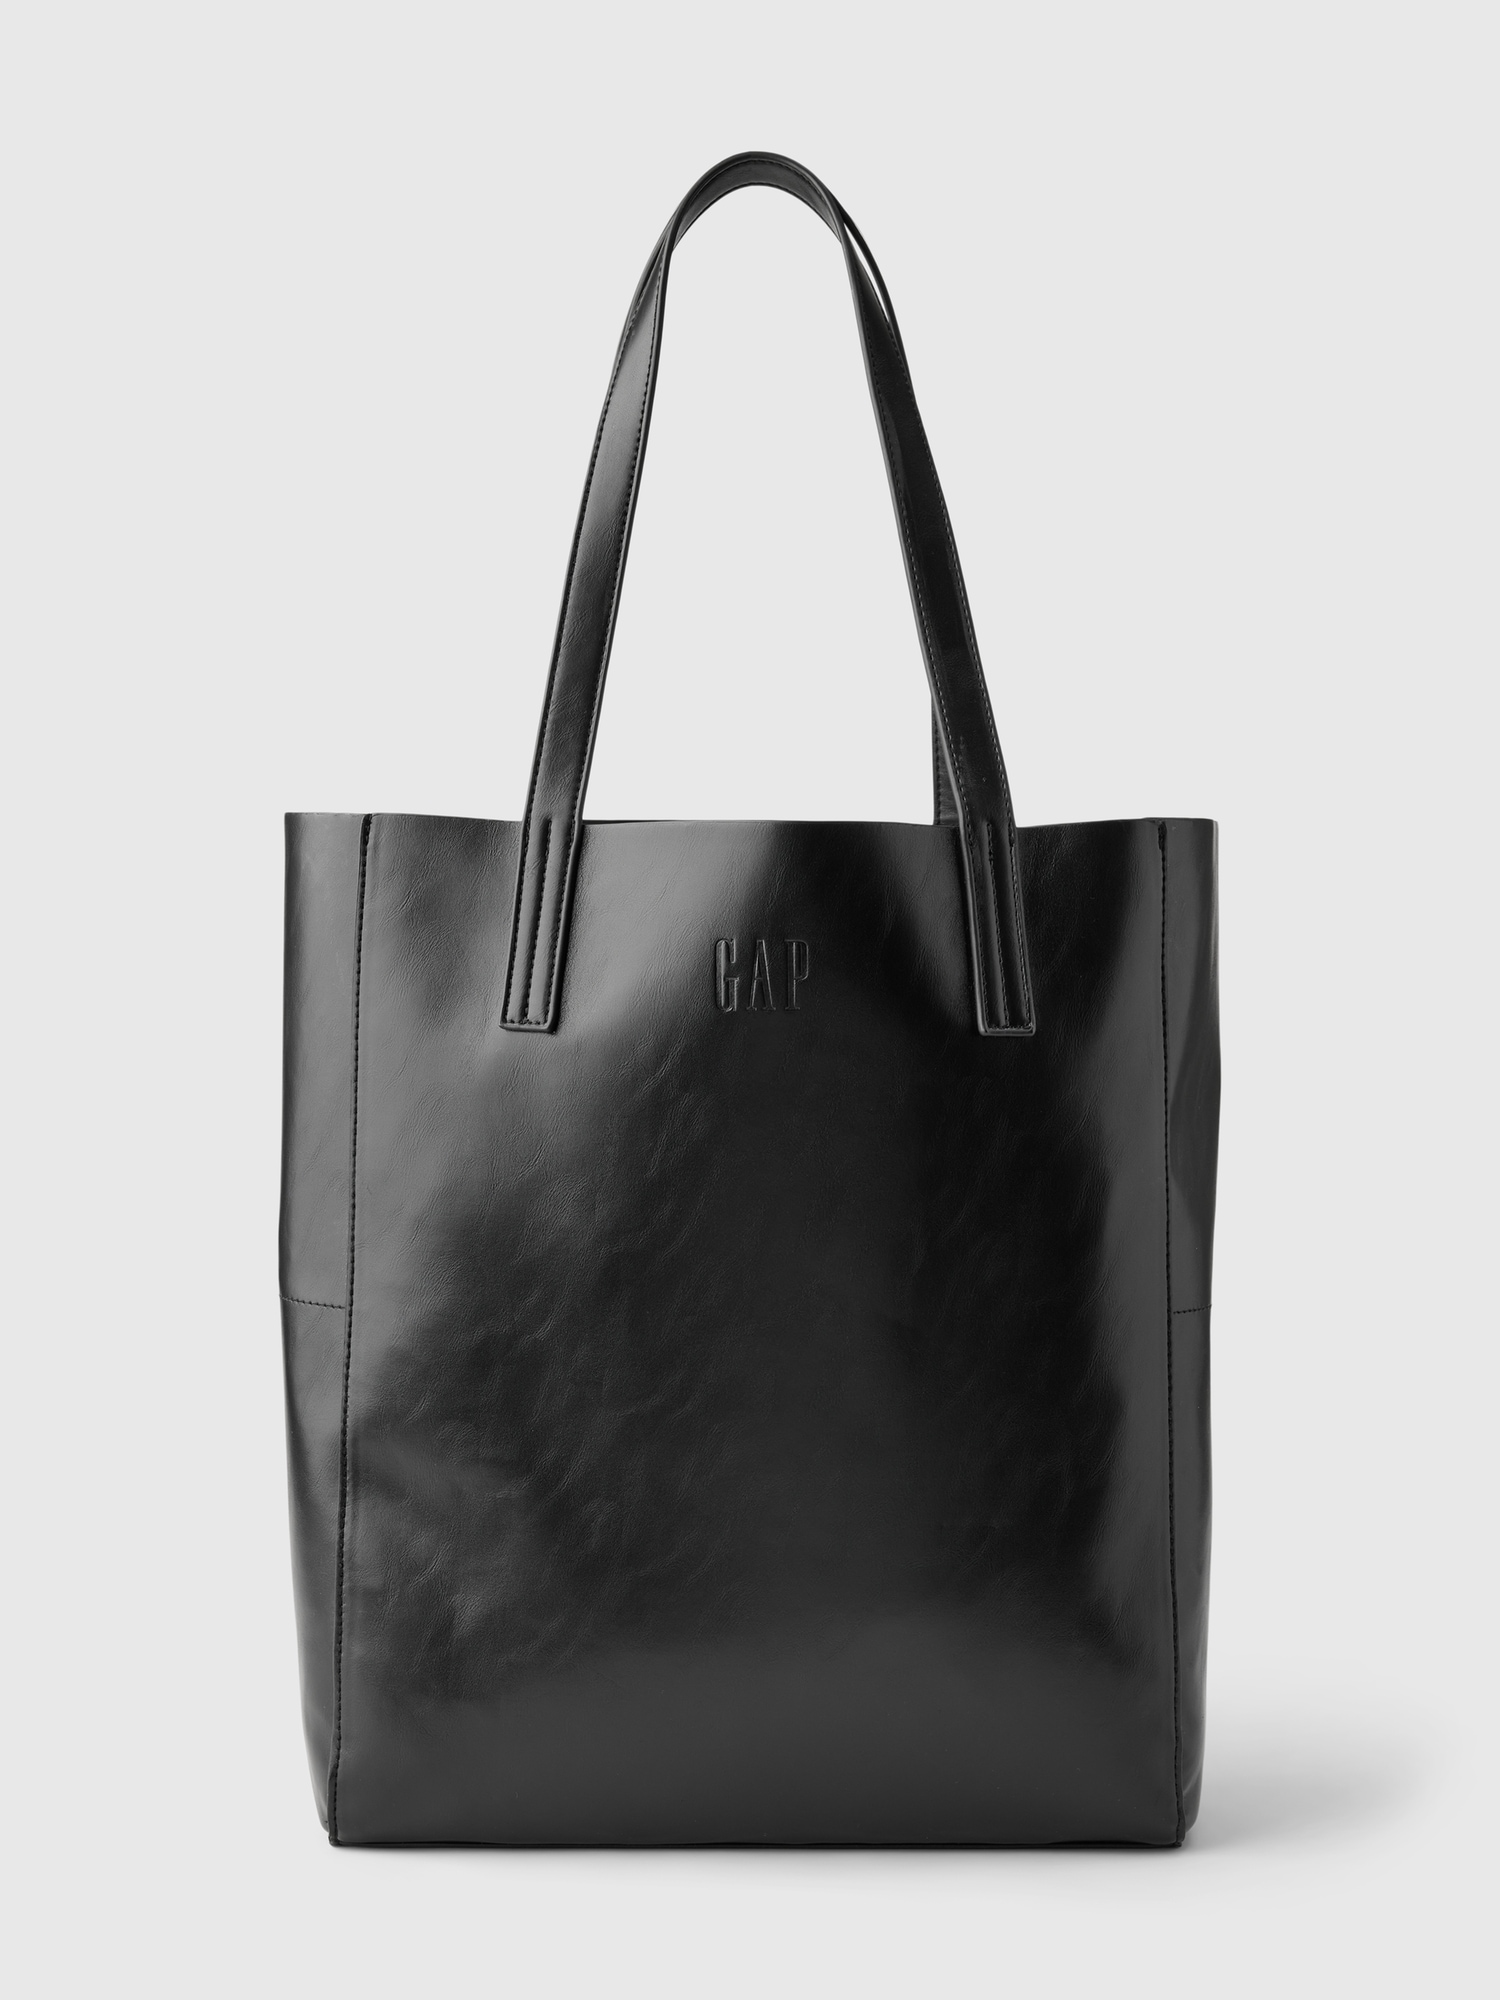 BLACK OVERSIZE SHOPPER Bag, Leather Shopper, Large Shopper, Shopper Bag,  Xxl Handbag, Black Large Shopper, Everyday Tote, Leather Handbag - Etsy